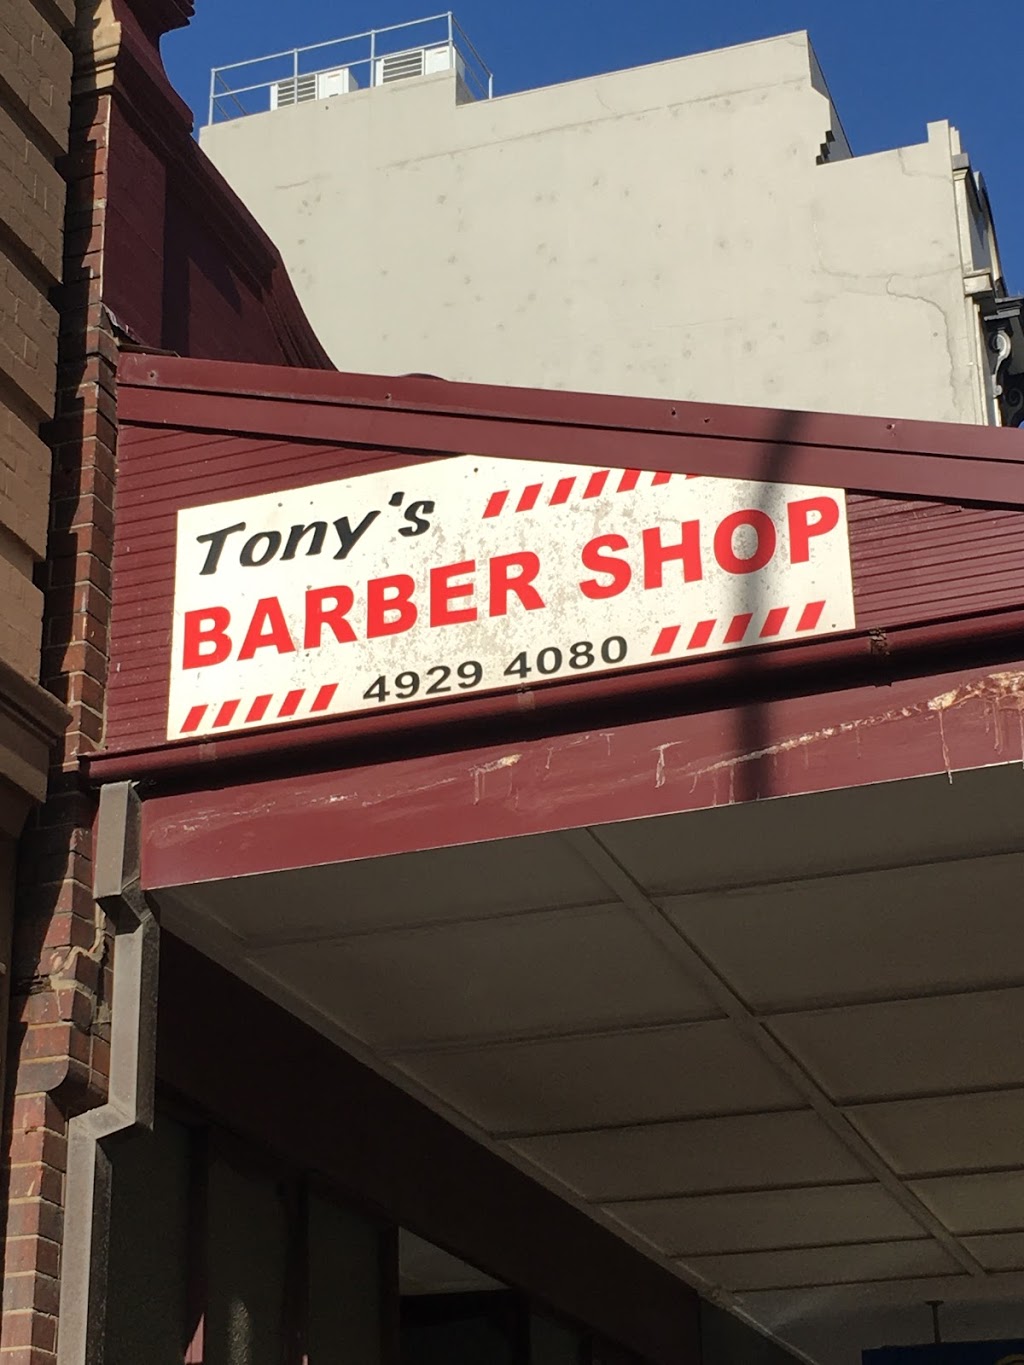 Barber Shop | 64 Hunter St, Newcastle NSW 2300, Australia